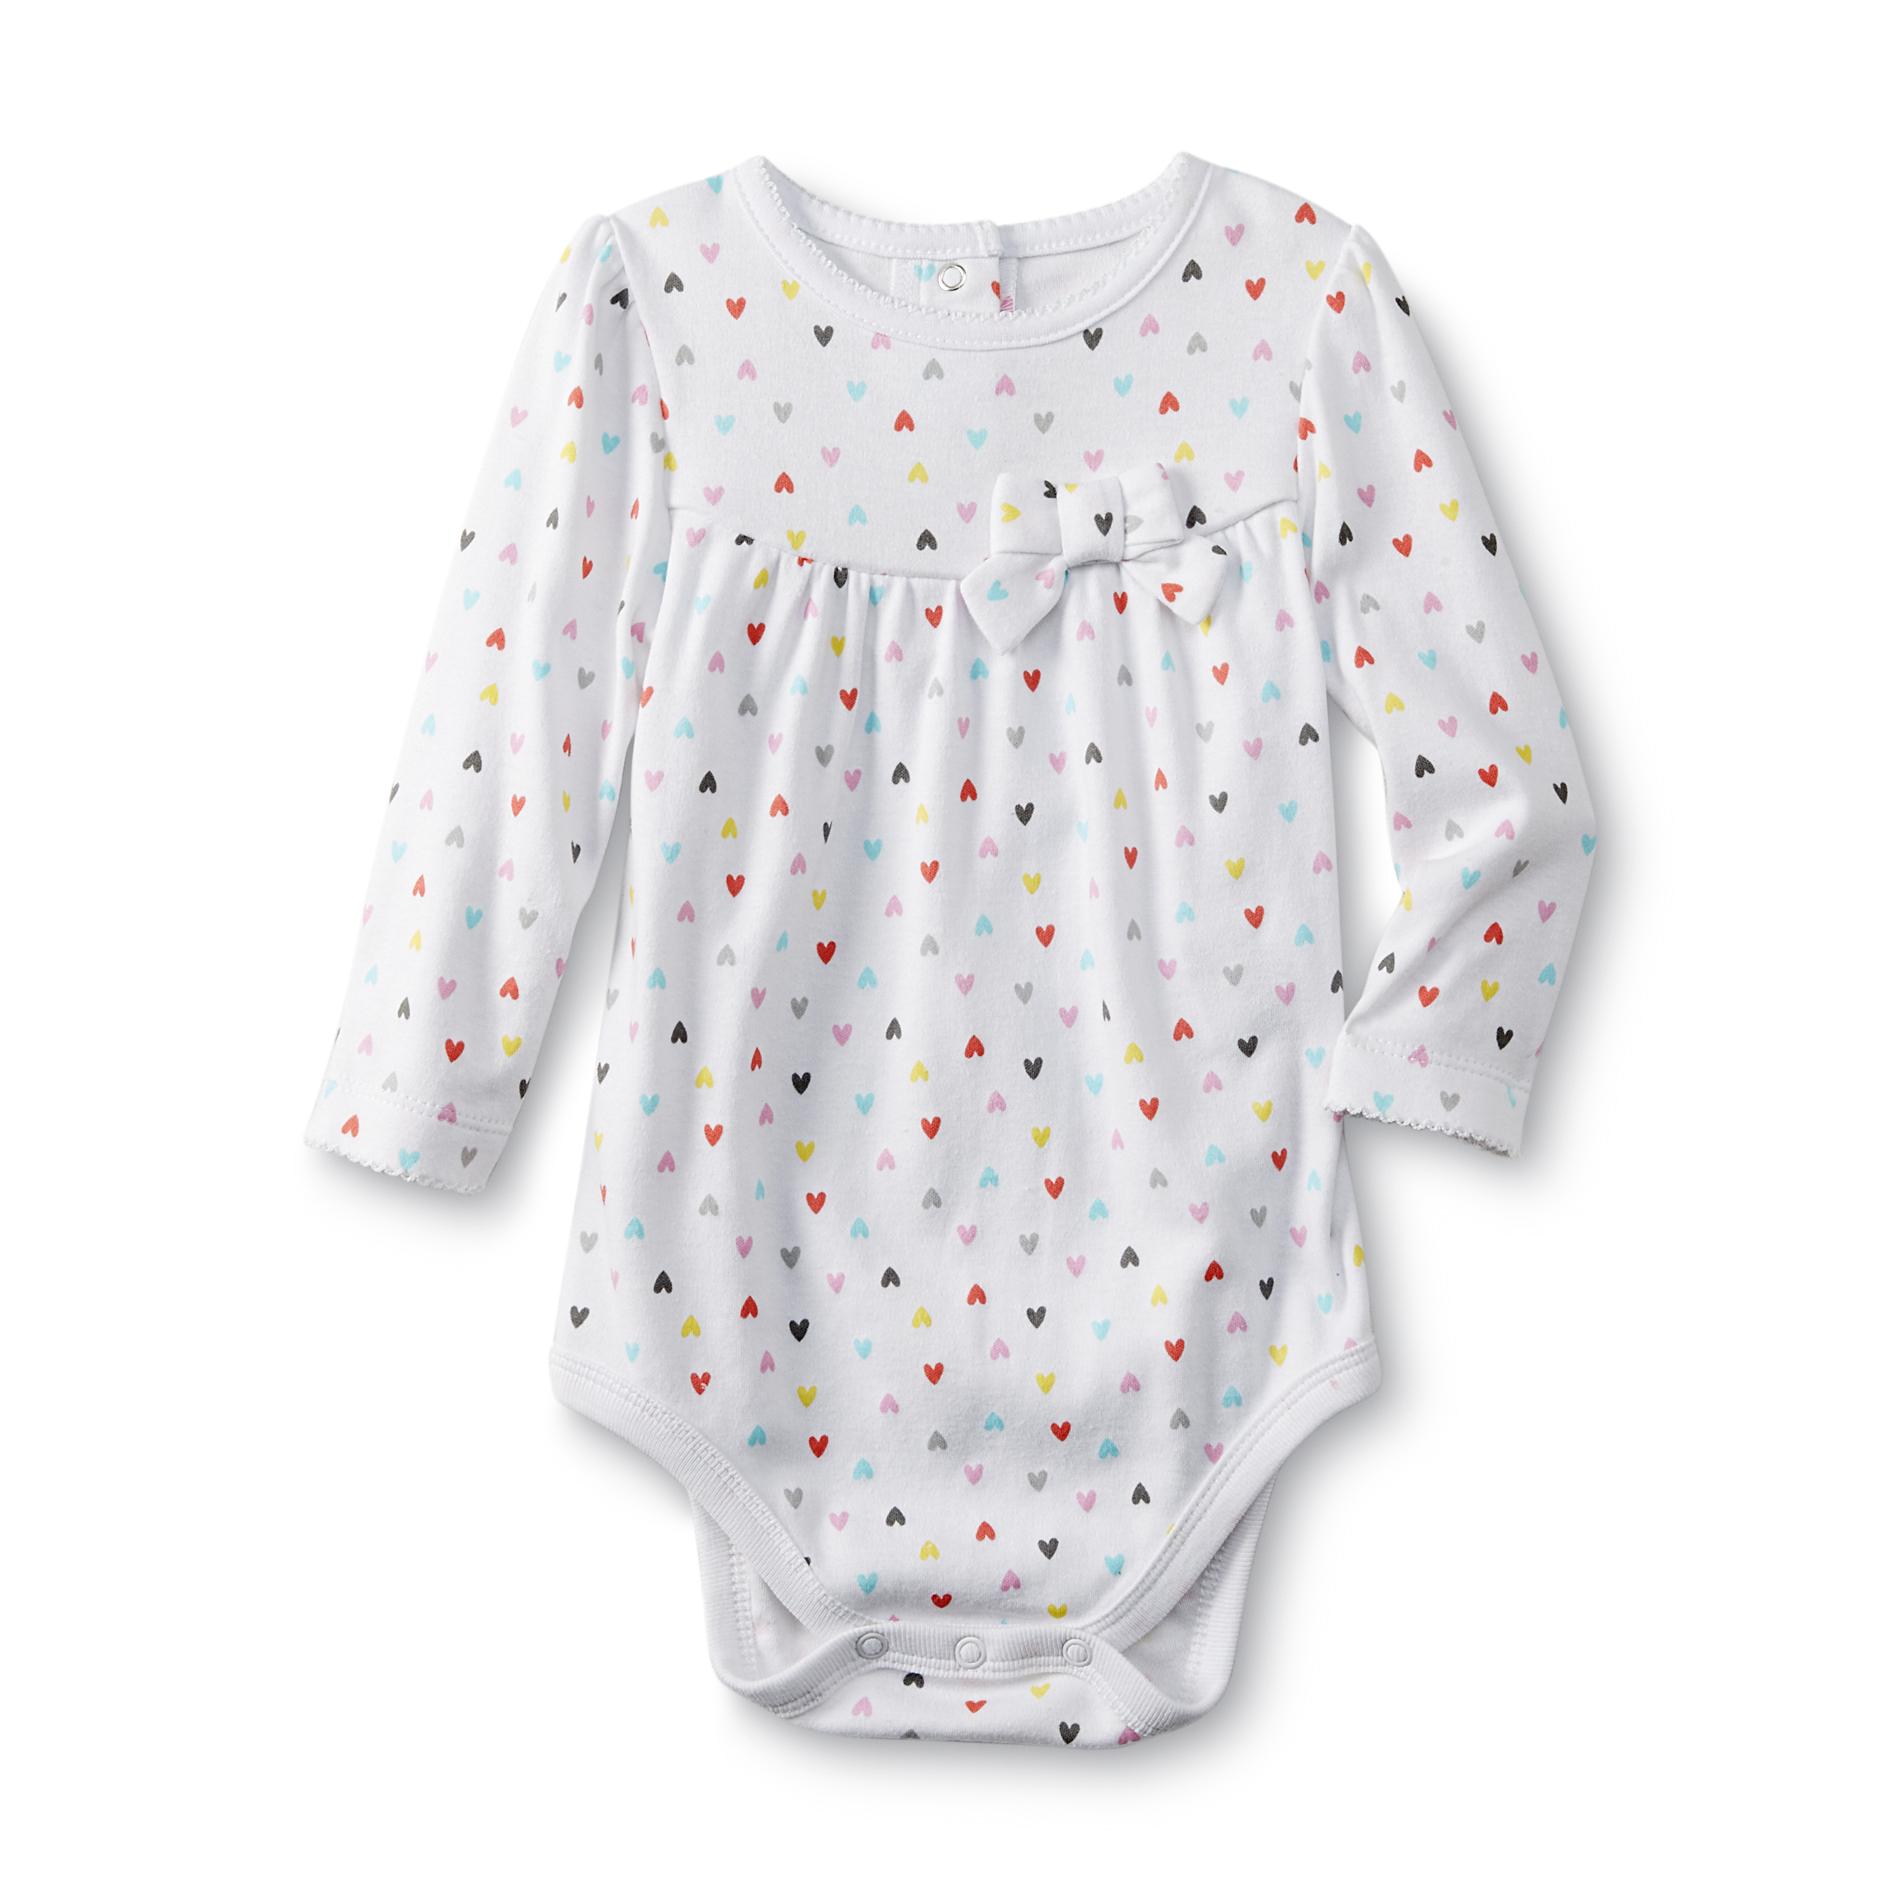 Small Wonders Newborn Girl's Long-Sleeve Bodysuit - Heart Print